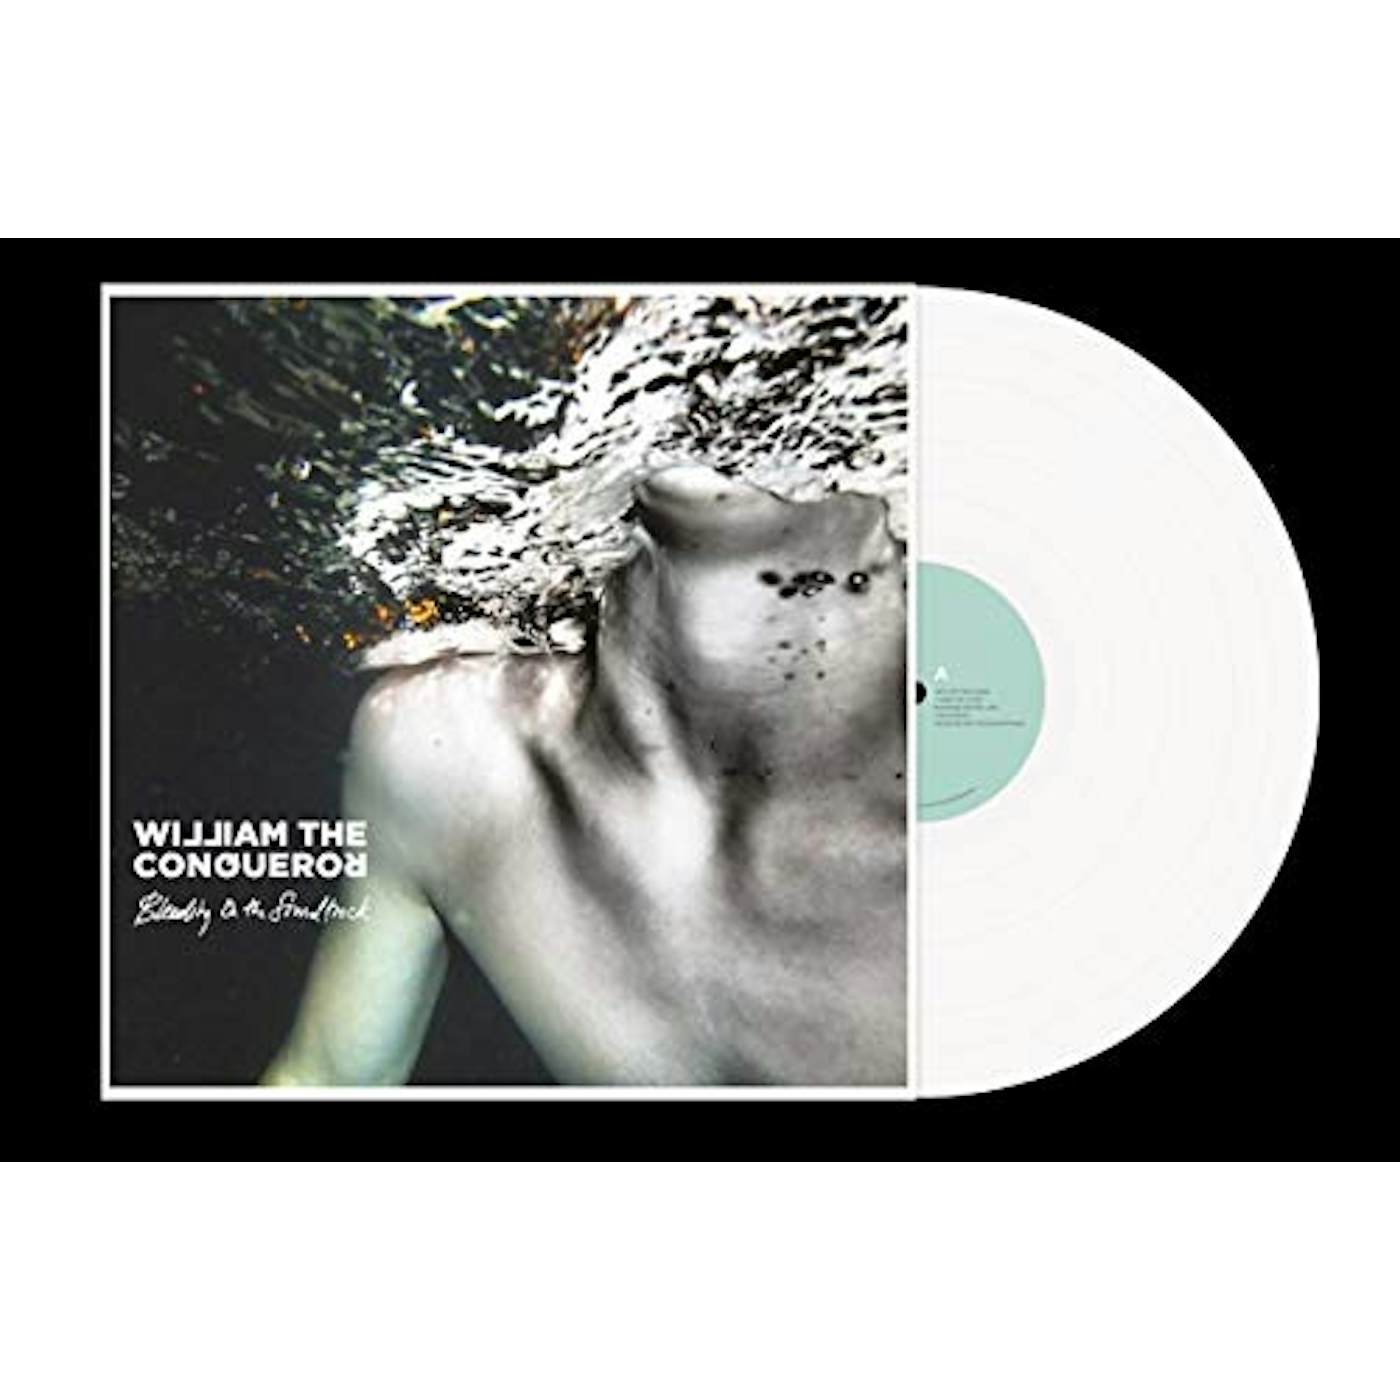 William The Conqueror Bleeding on the Soundtrack Vinyl Record